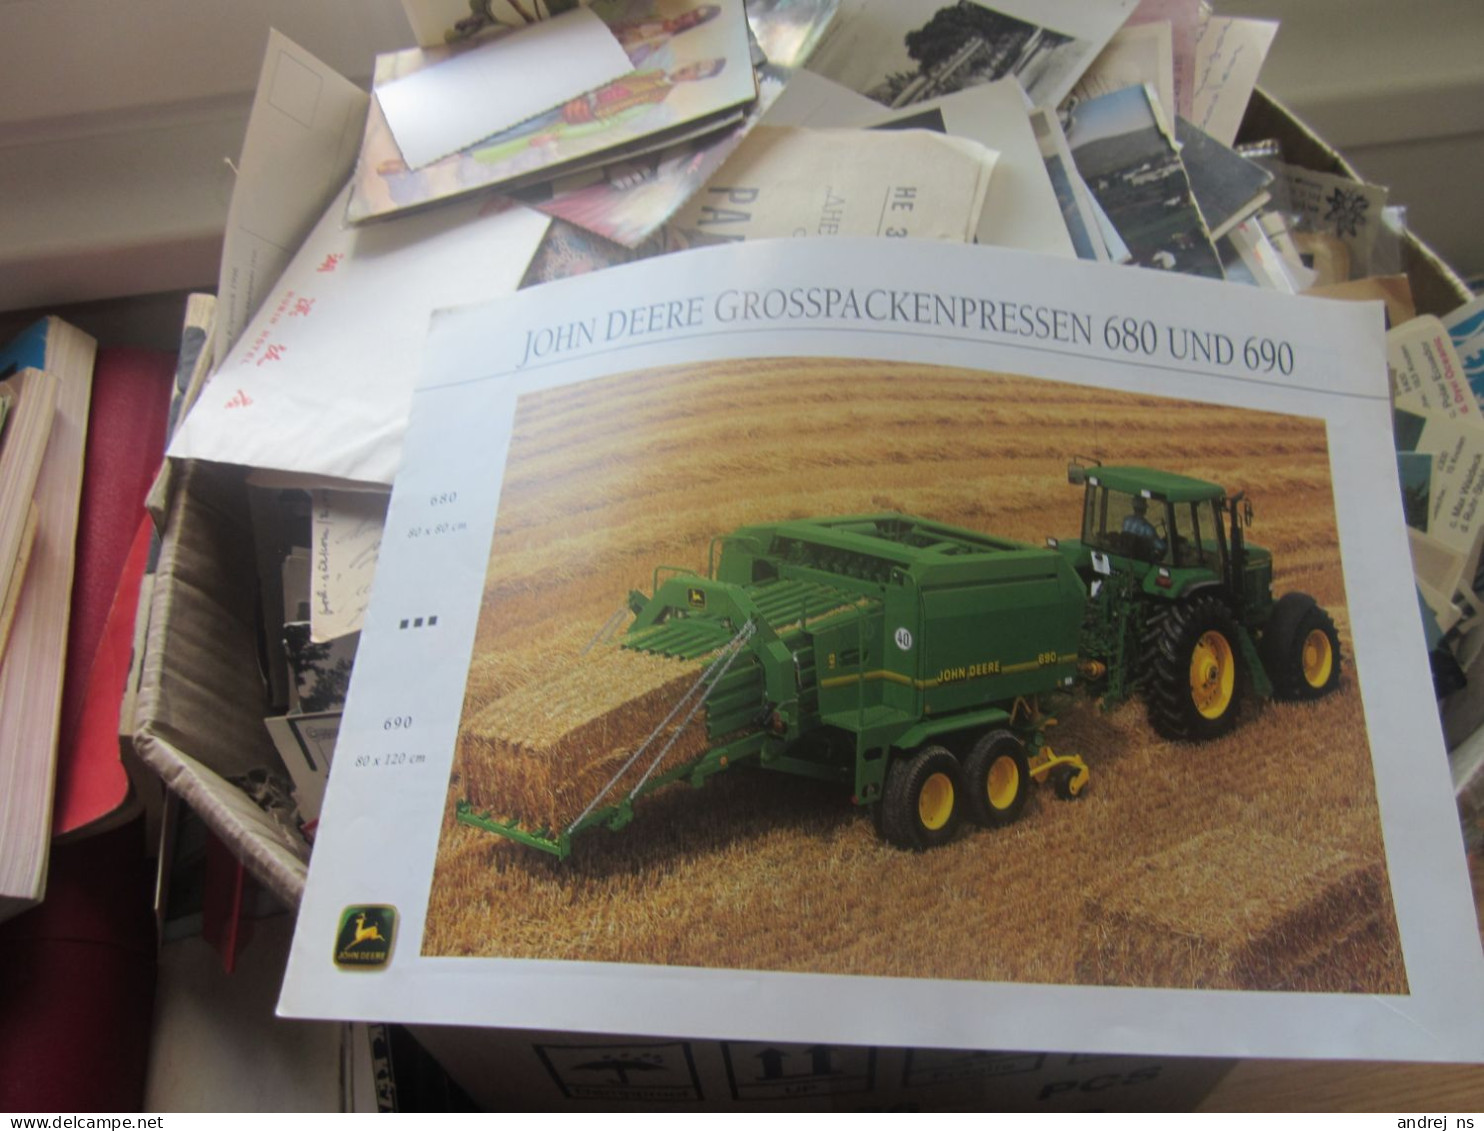 John Deere Grosspackenpressen 680 Und 690 Catalog Of Tractors And Agricultural Machinery - Werbung